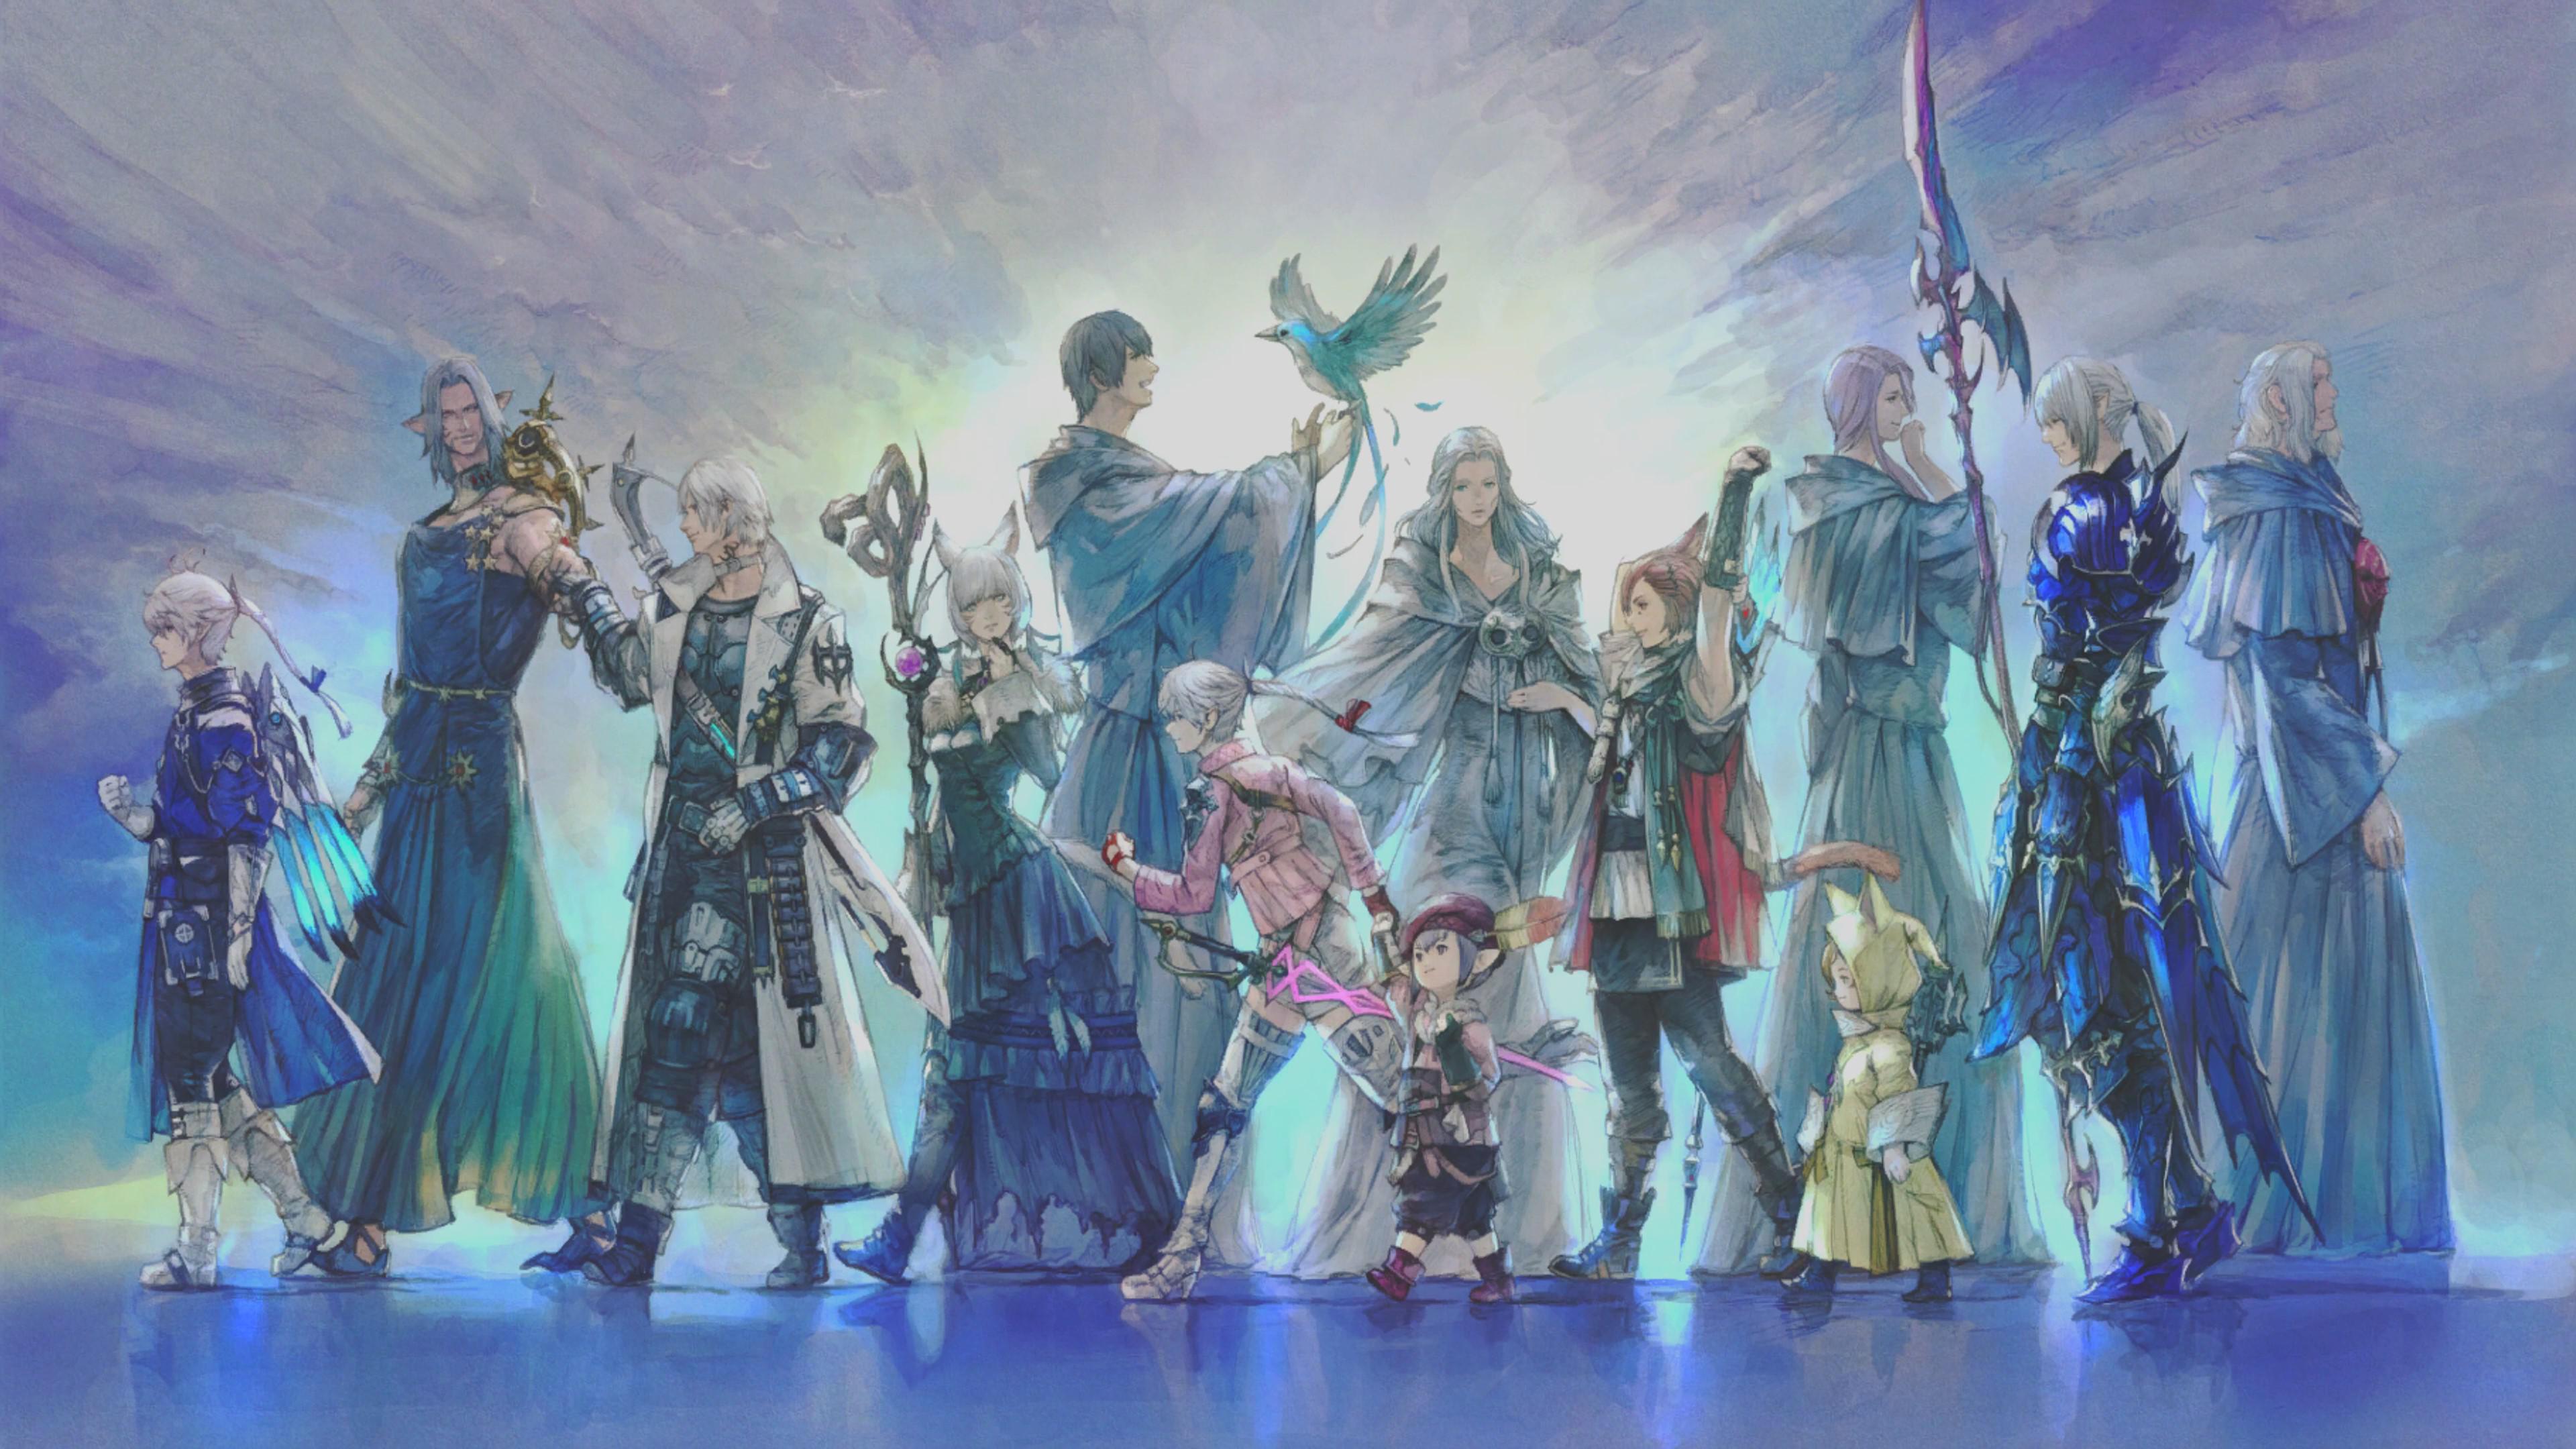 Final Fantasy 14 Endwalker Wallpapers  Top 20 Best Final Fantasy Endwalker  Backgrounds